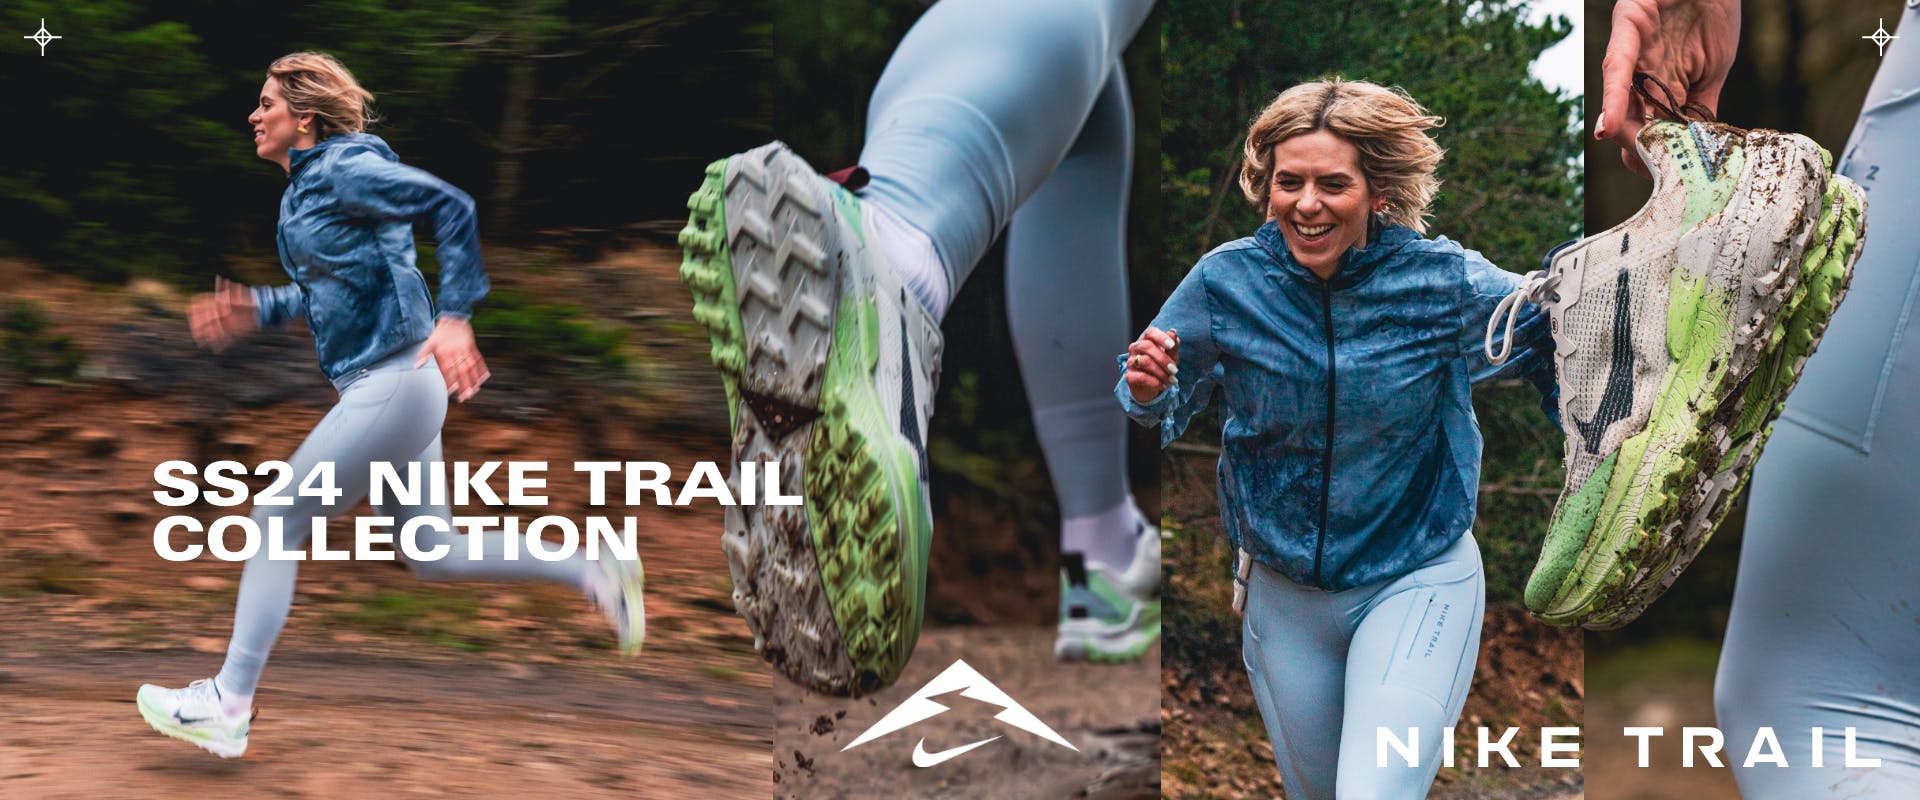 Nike X Hattie Trail 